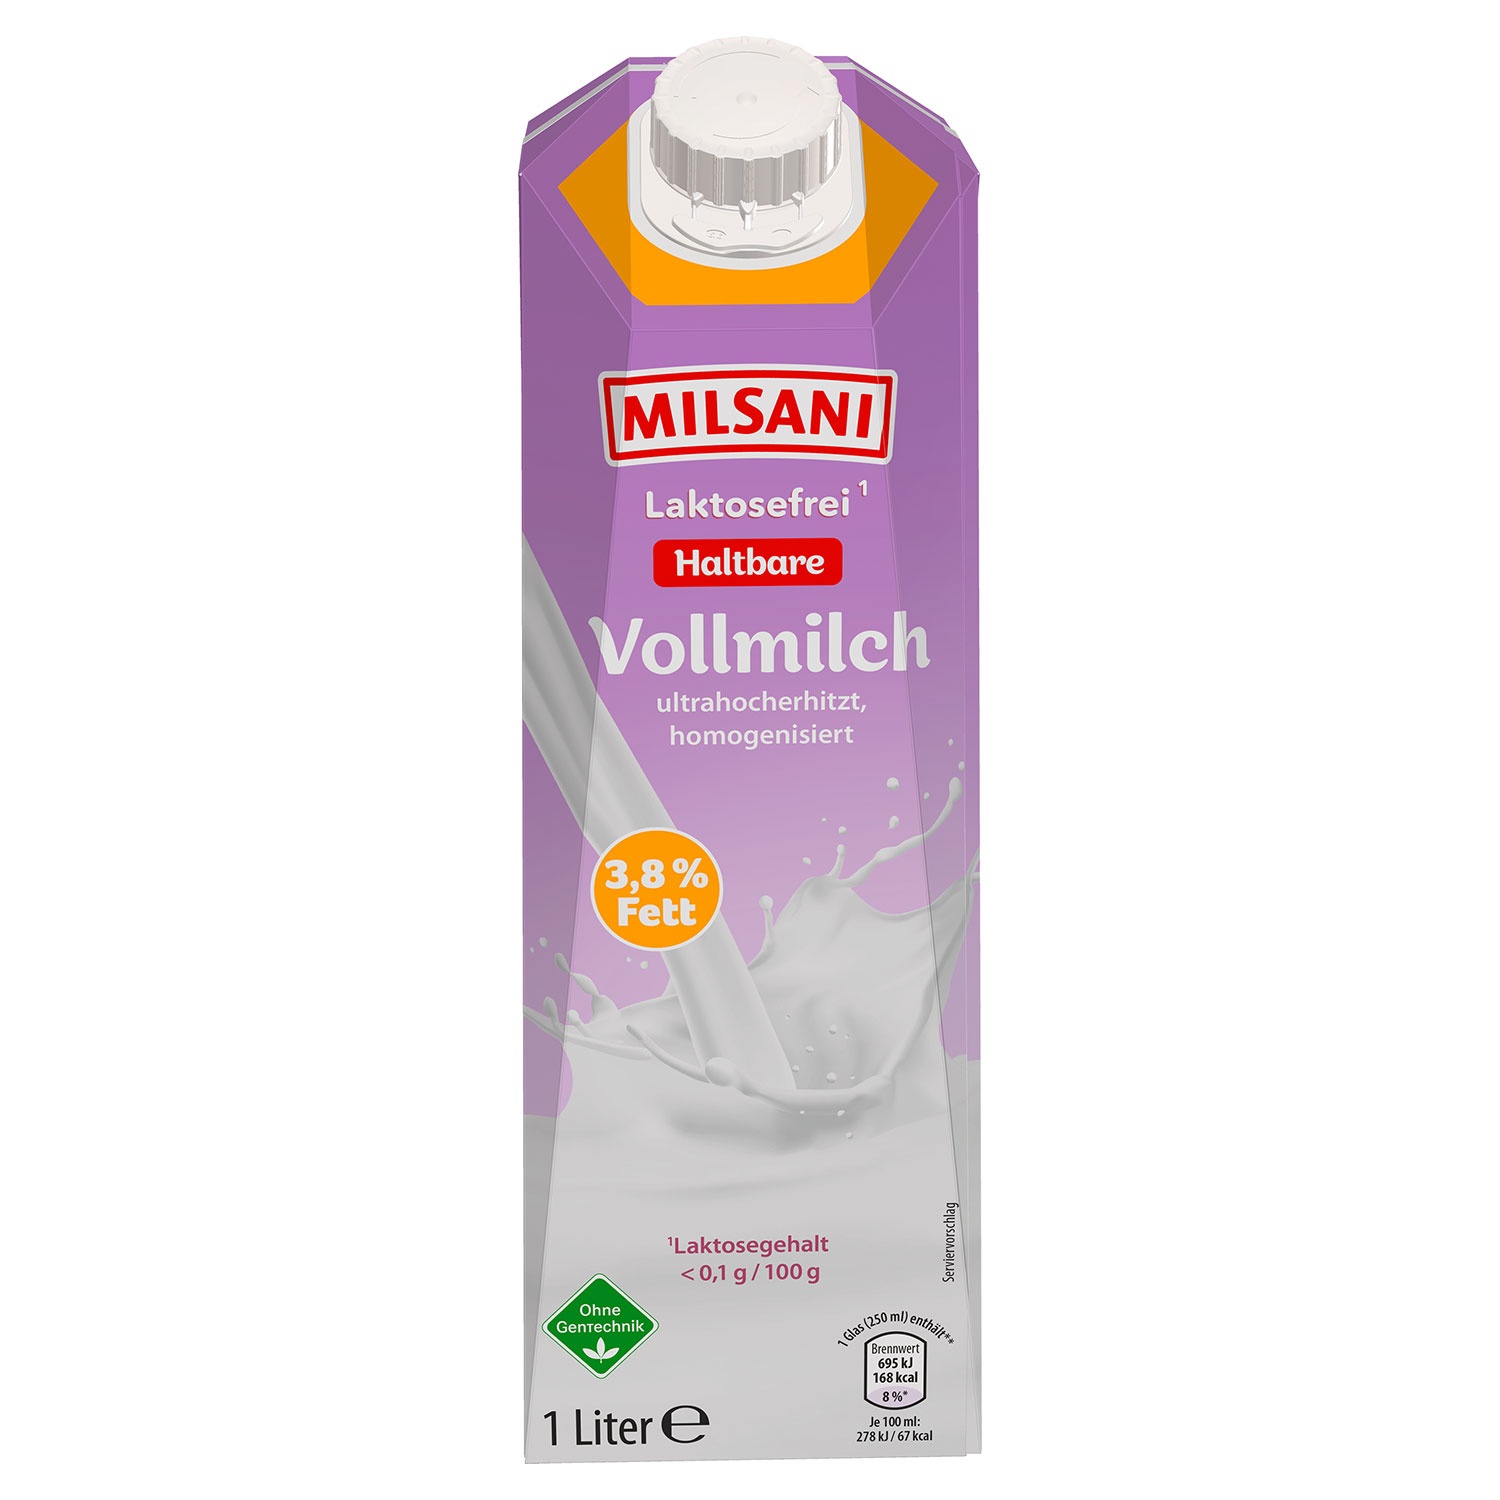 MILSANI Laktosefreie² H-Milch 3,8% Fett 1 l